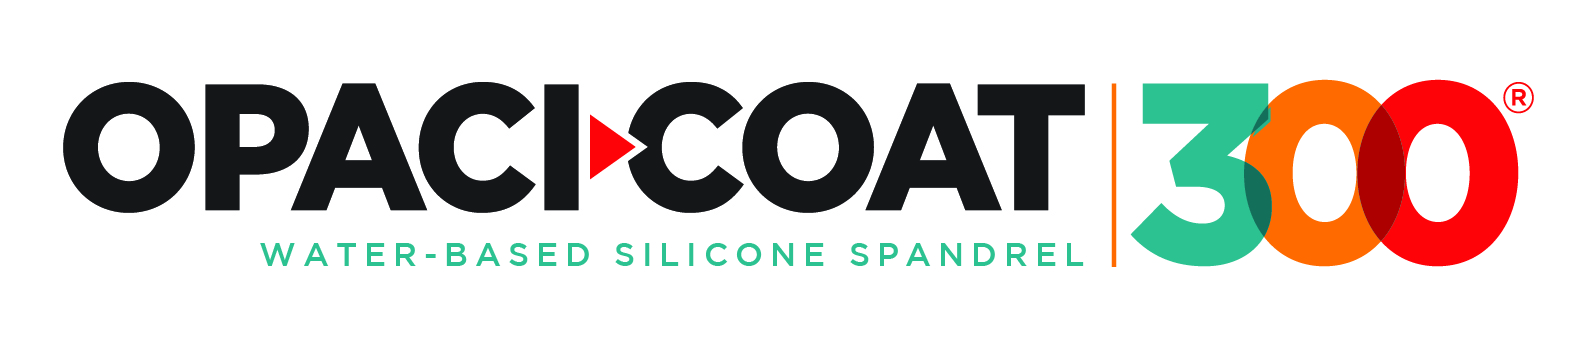 ICD High Performance Coatings OPACI-COAT-300® Water-Based Silicone Spandrel Coating Logo